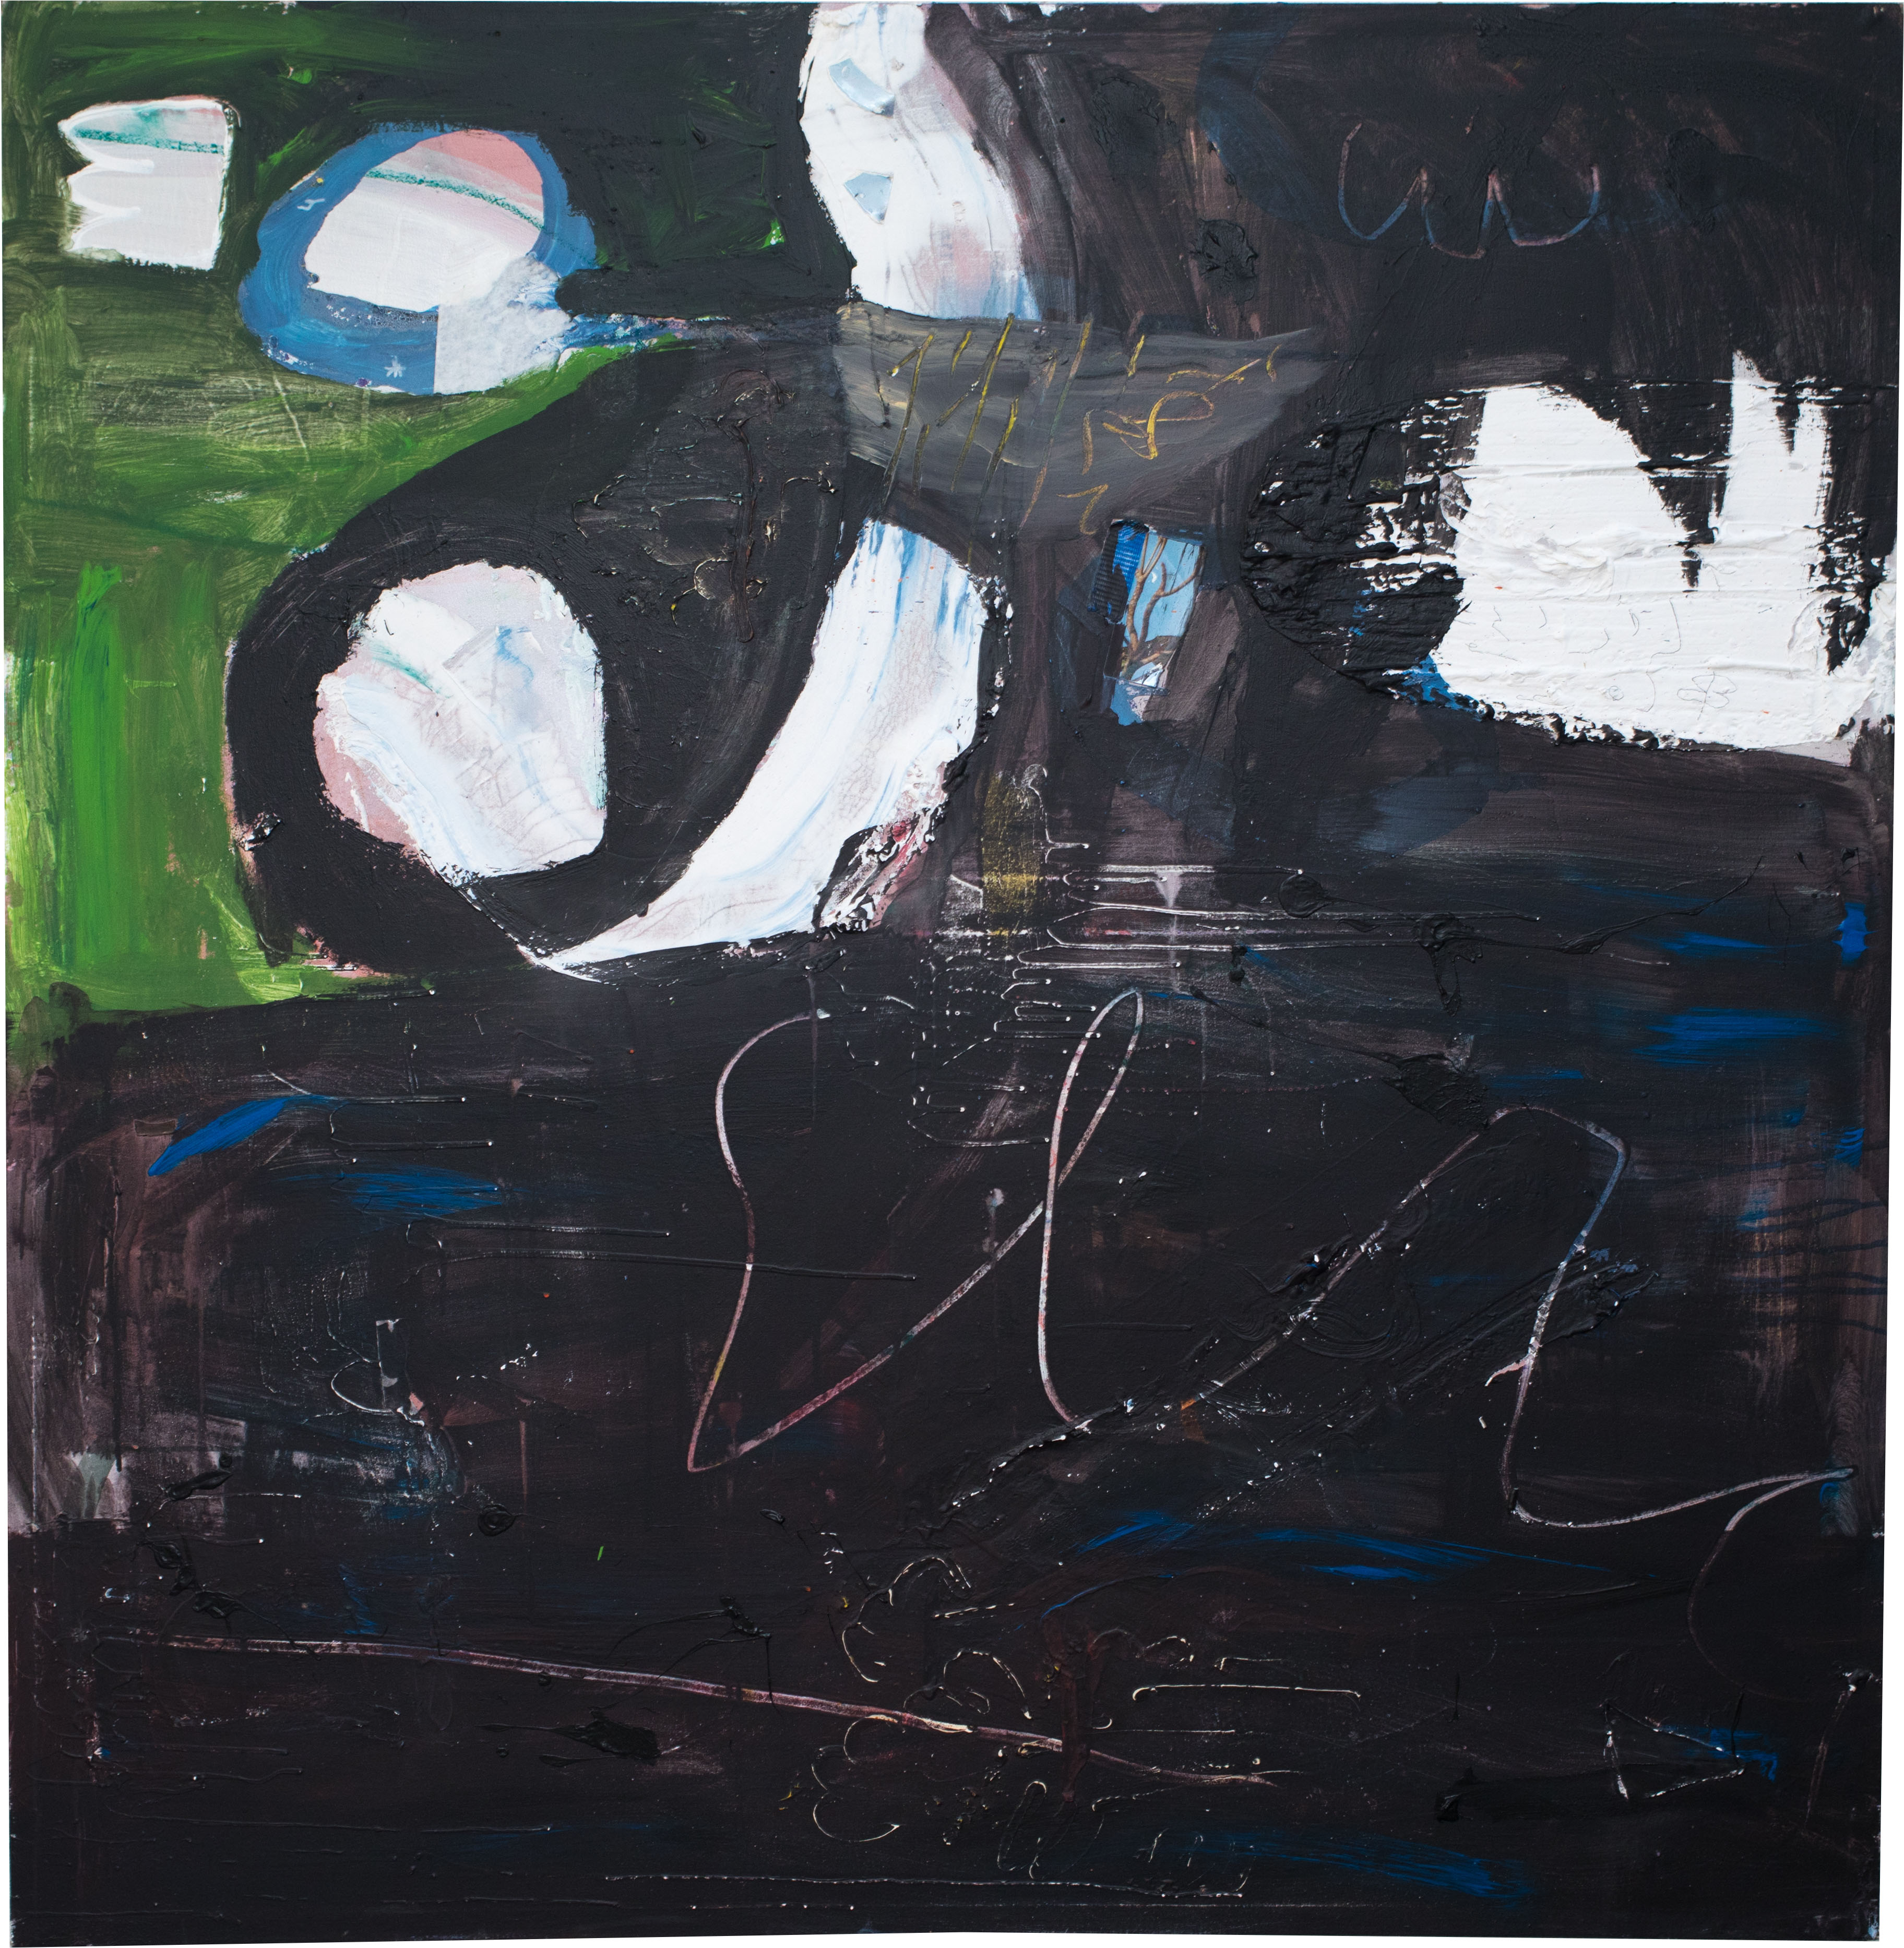 15. GaKO. Art Alexandre Furcolin, Cupim, 2022, 135 x 135 cm